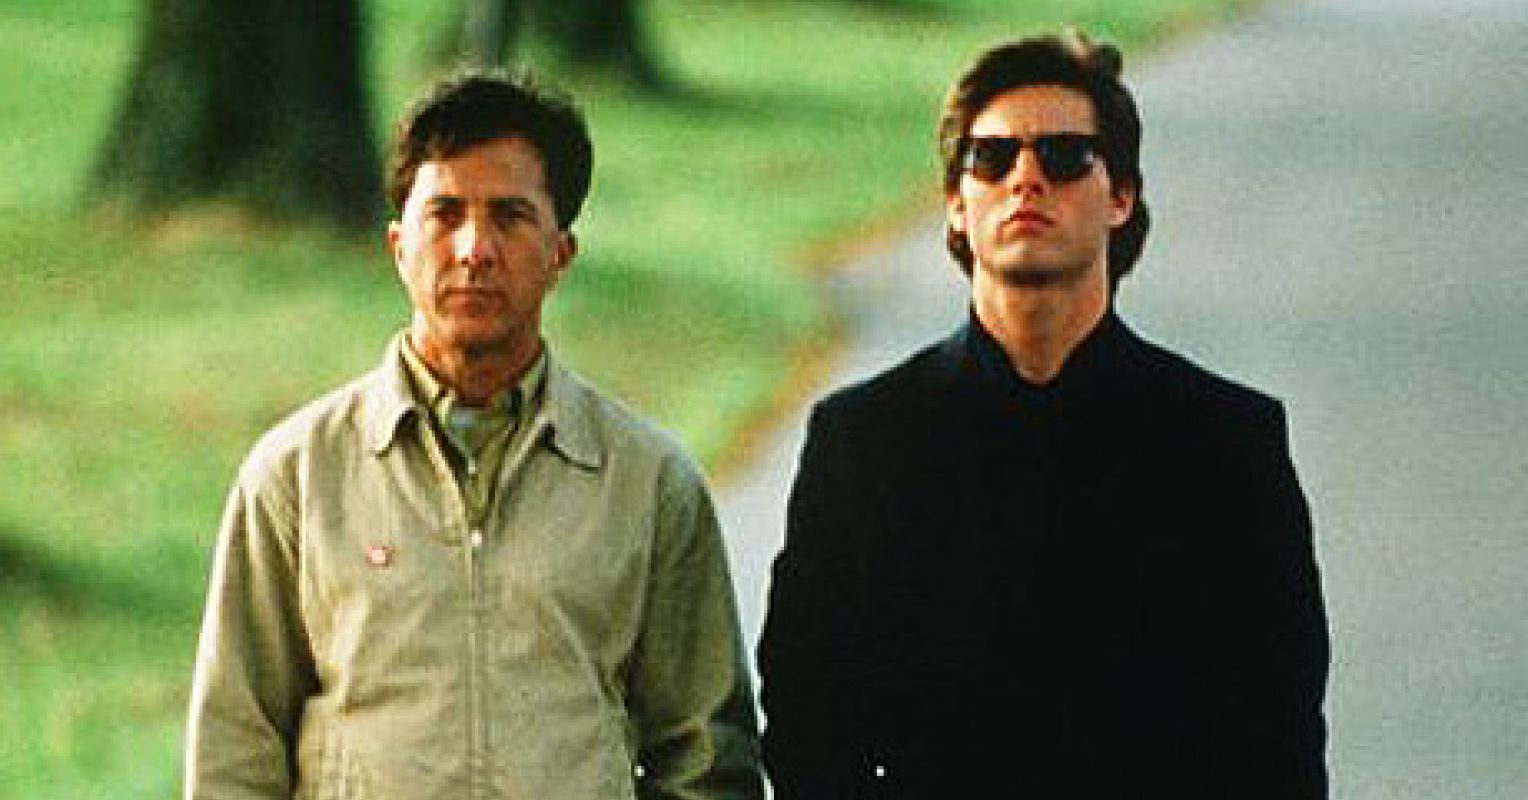 Rain Man movie review & film summary (1988)